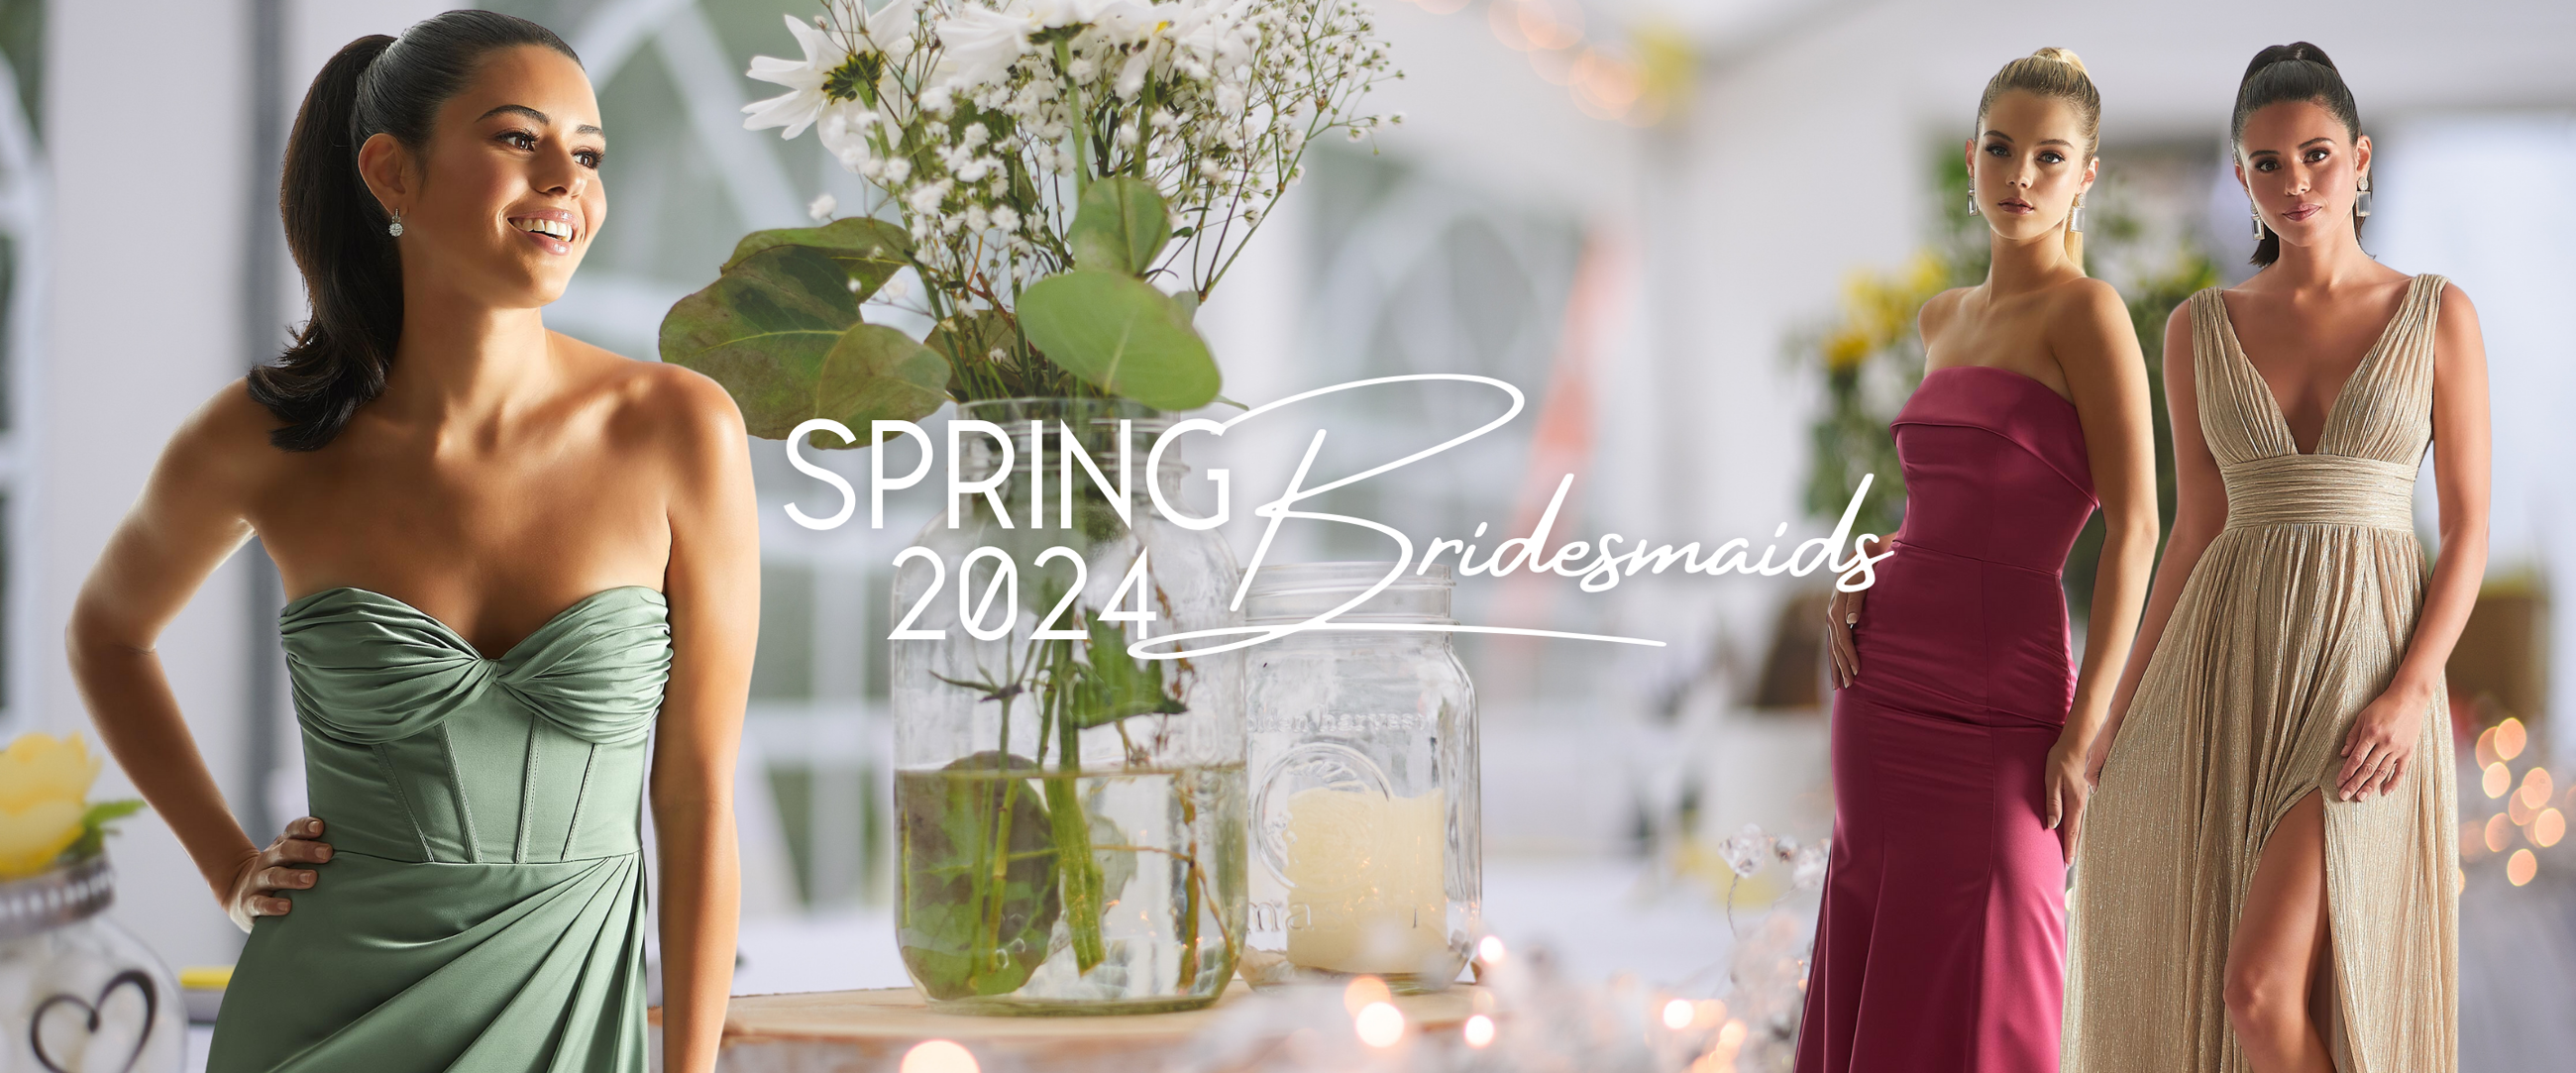 Spring 2024 Bridesmaids banner desktop